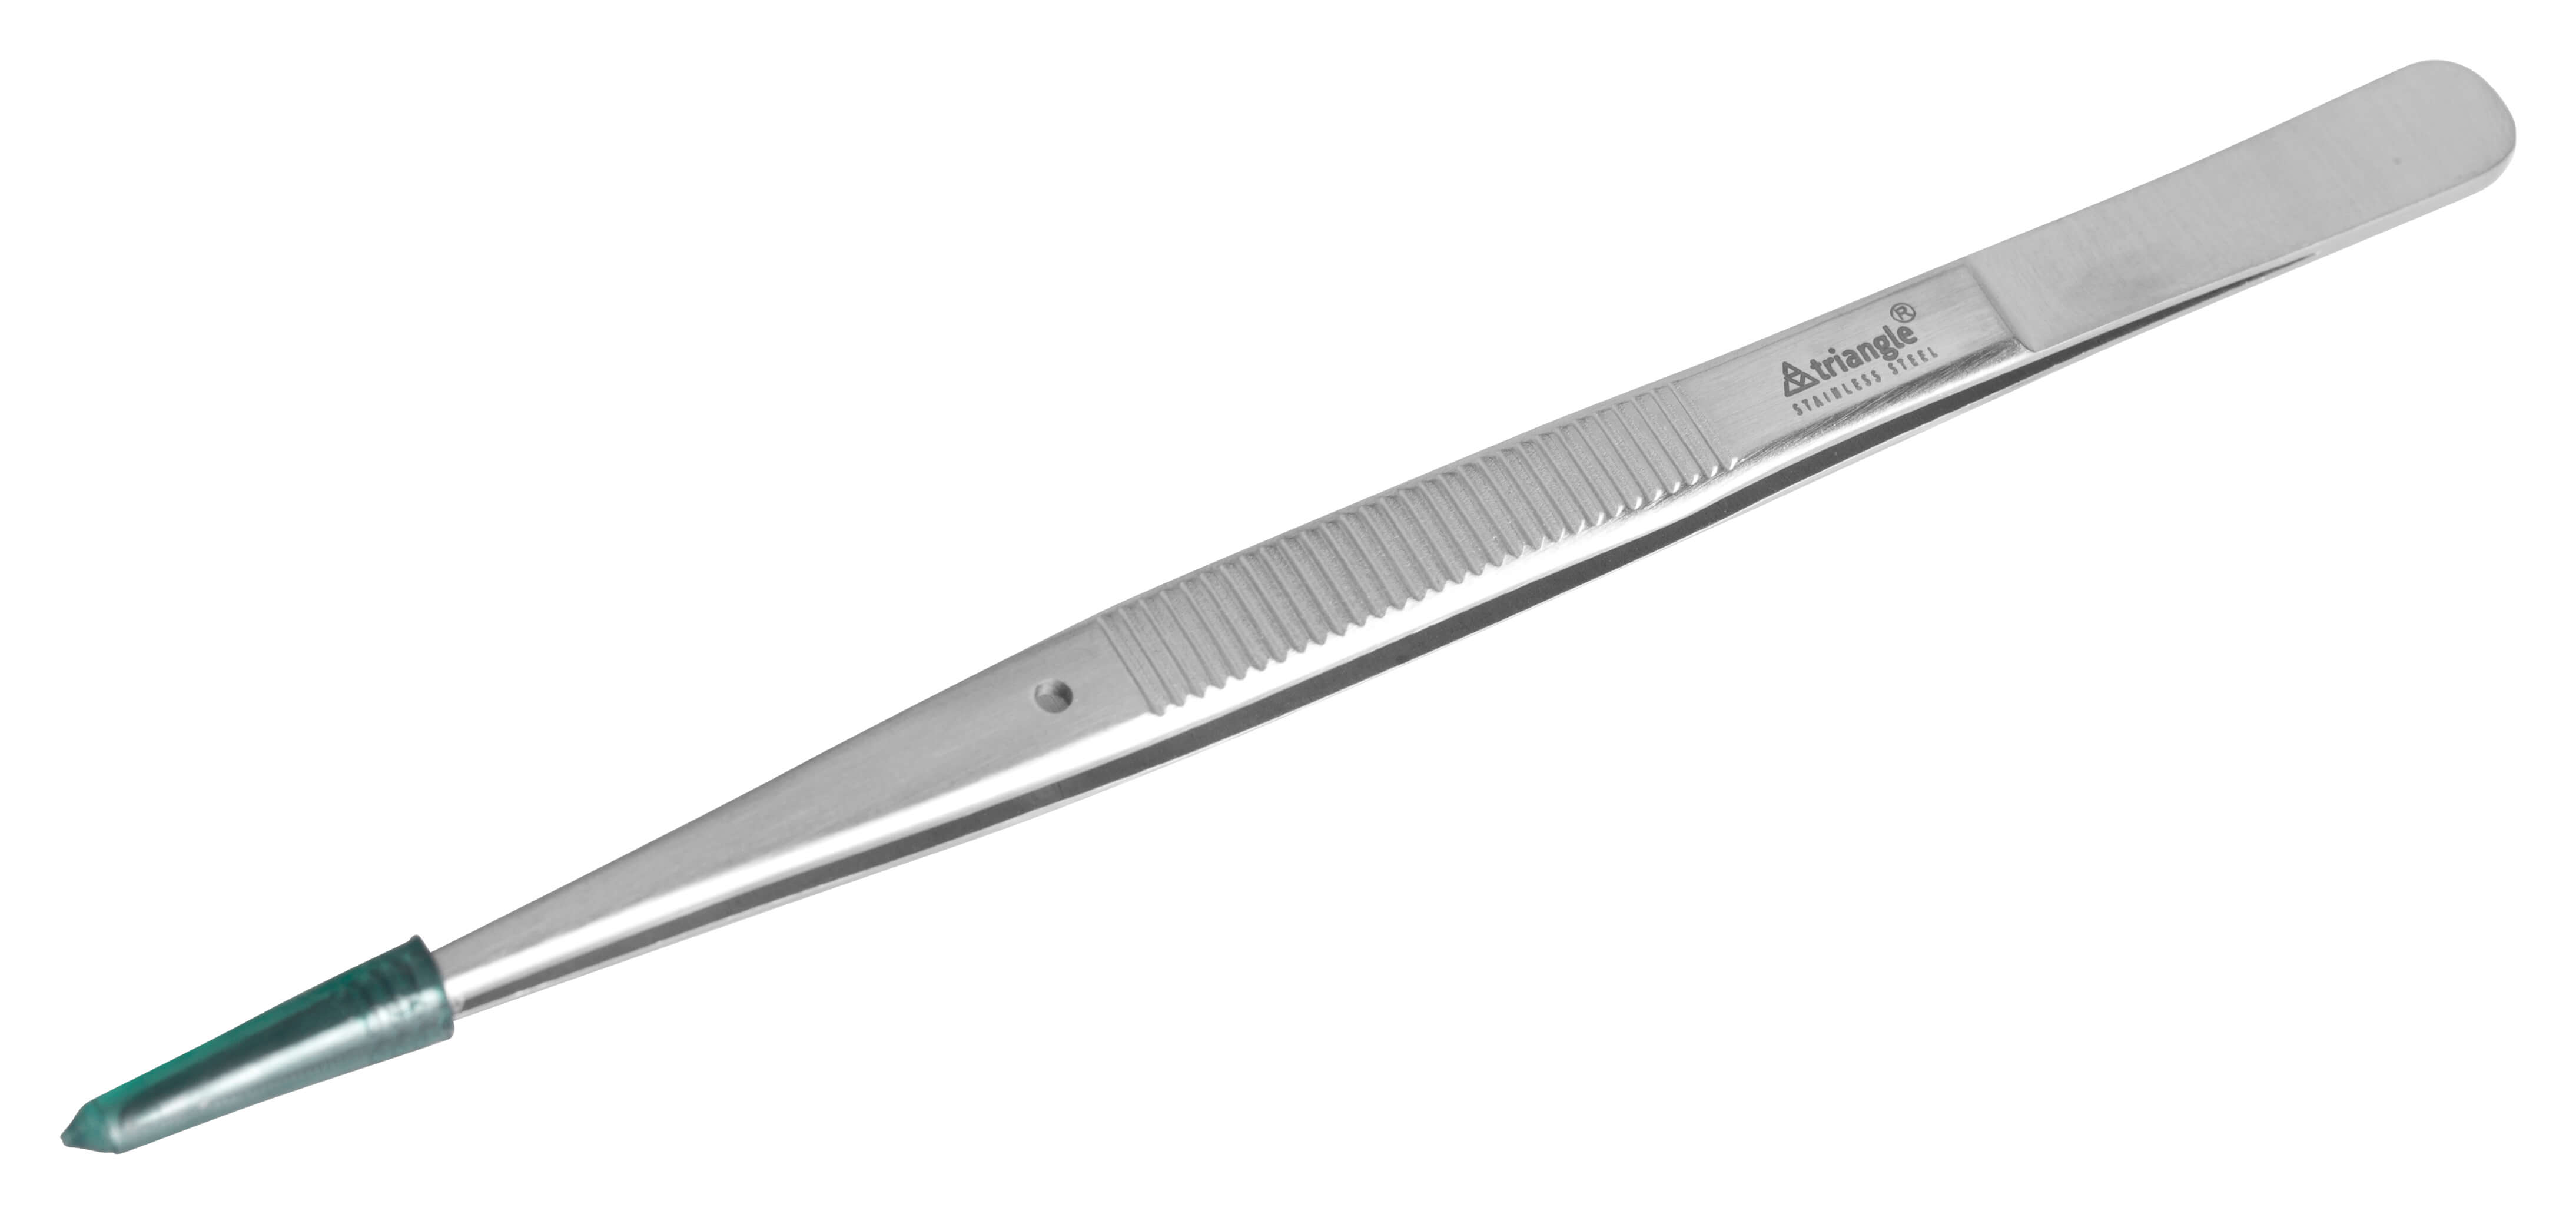 Stainless steel tweezers, Triangle - 15cm